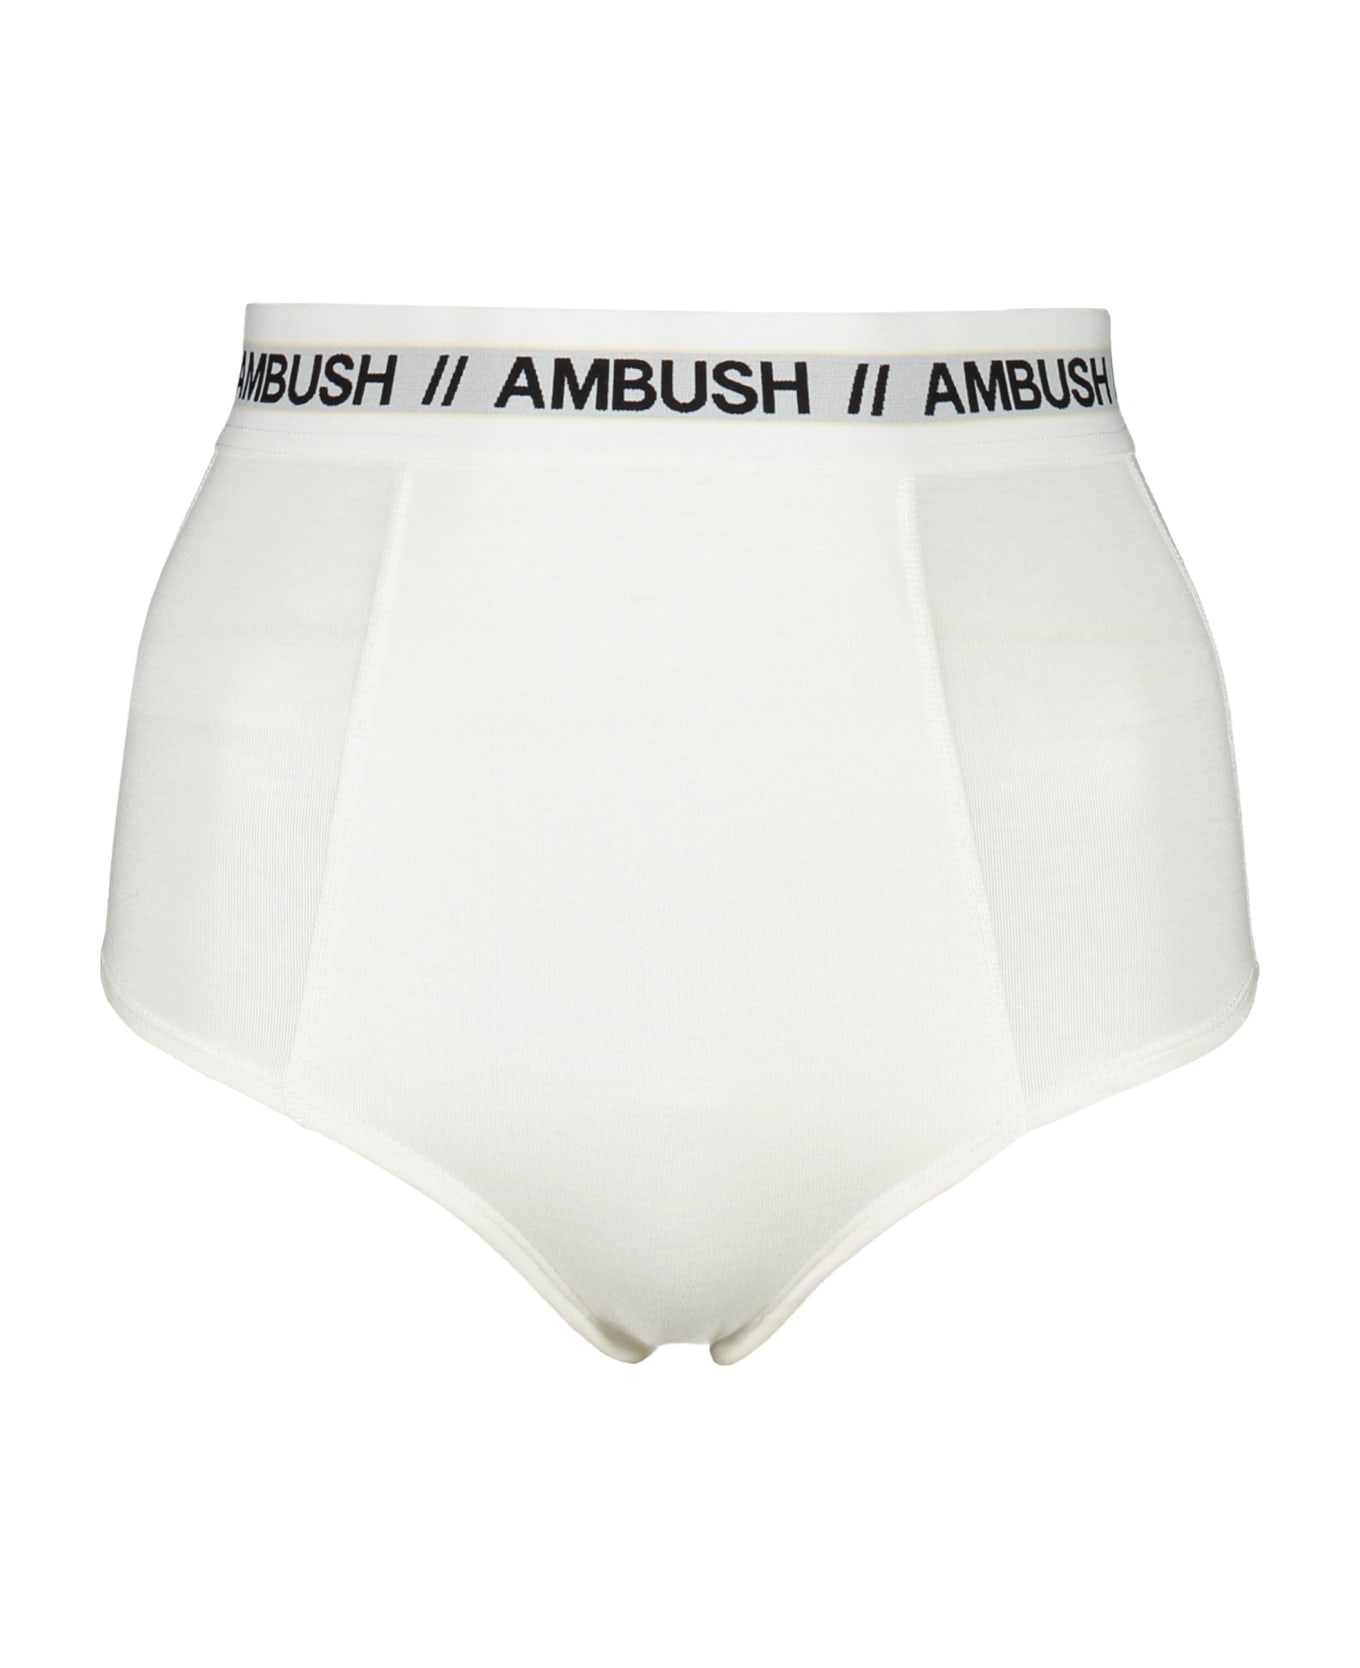 AMBUSH Plain Color Briefs - White